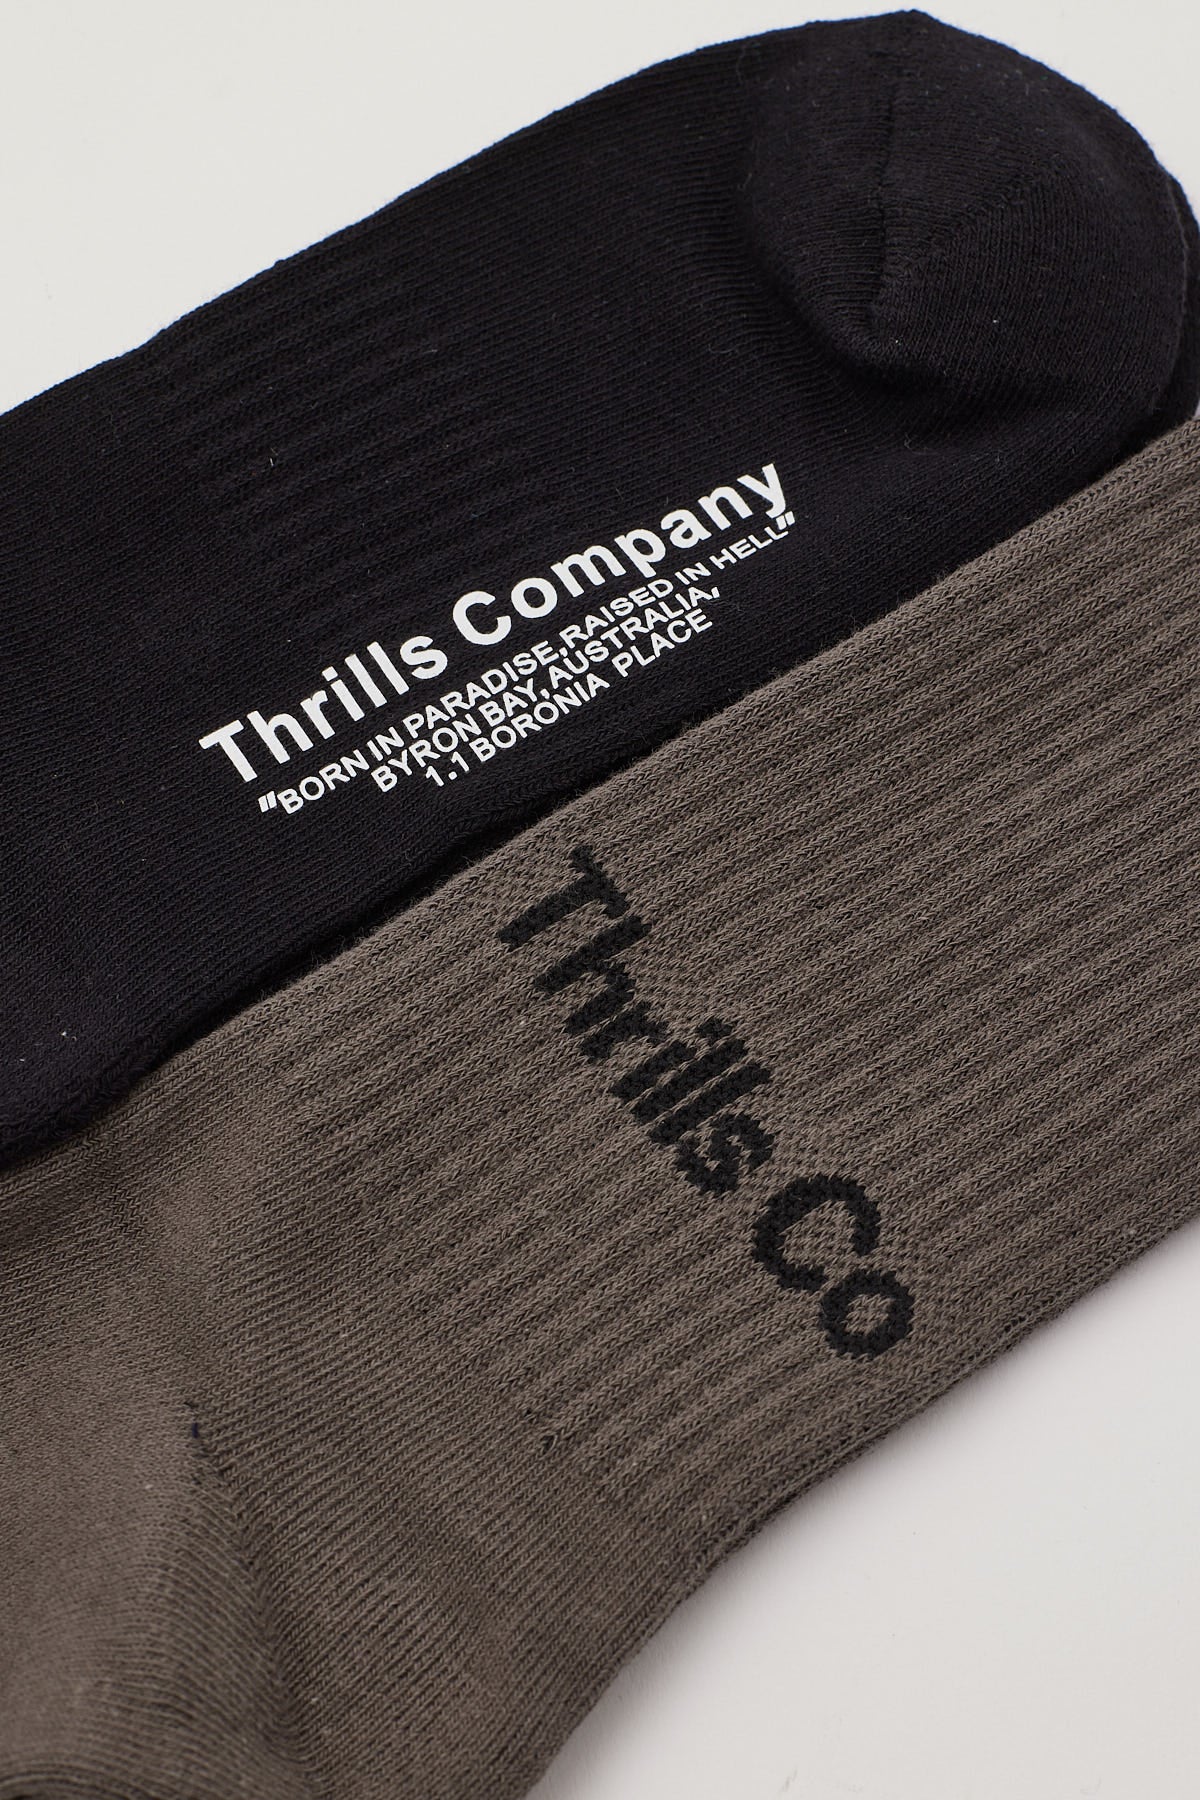 Thrills Coordinates 2 Pack Socks Black/Desert – Universal Store